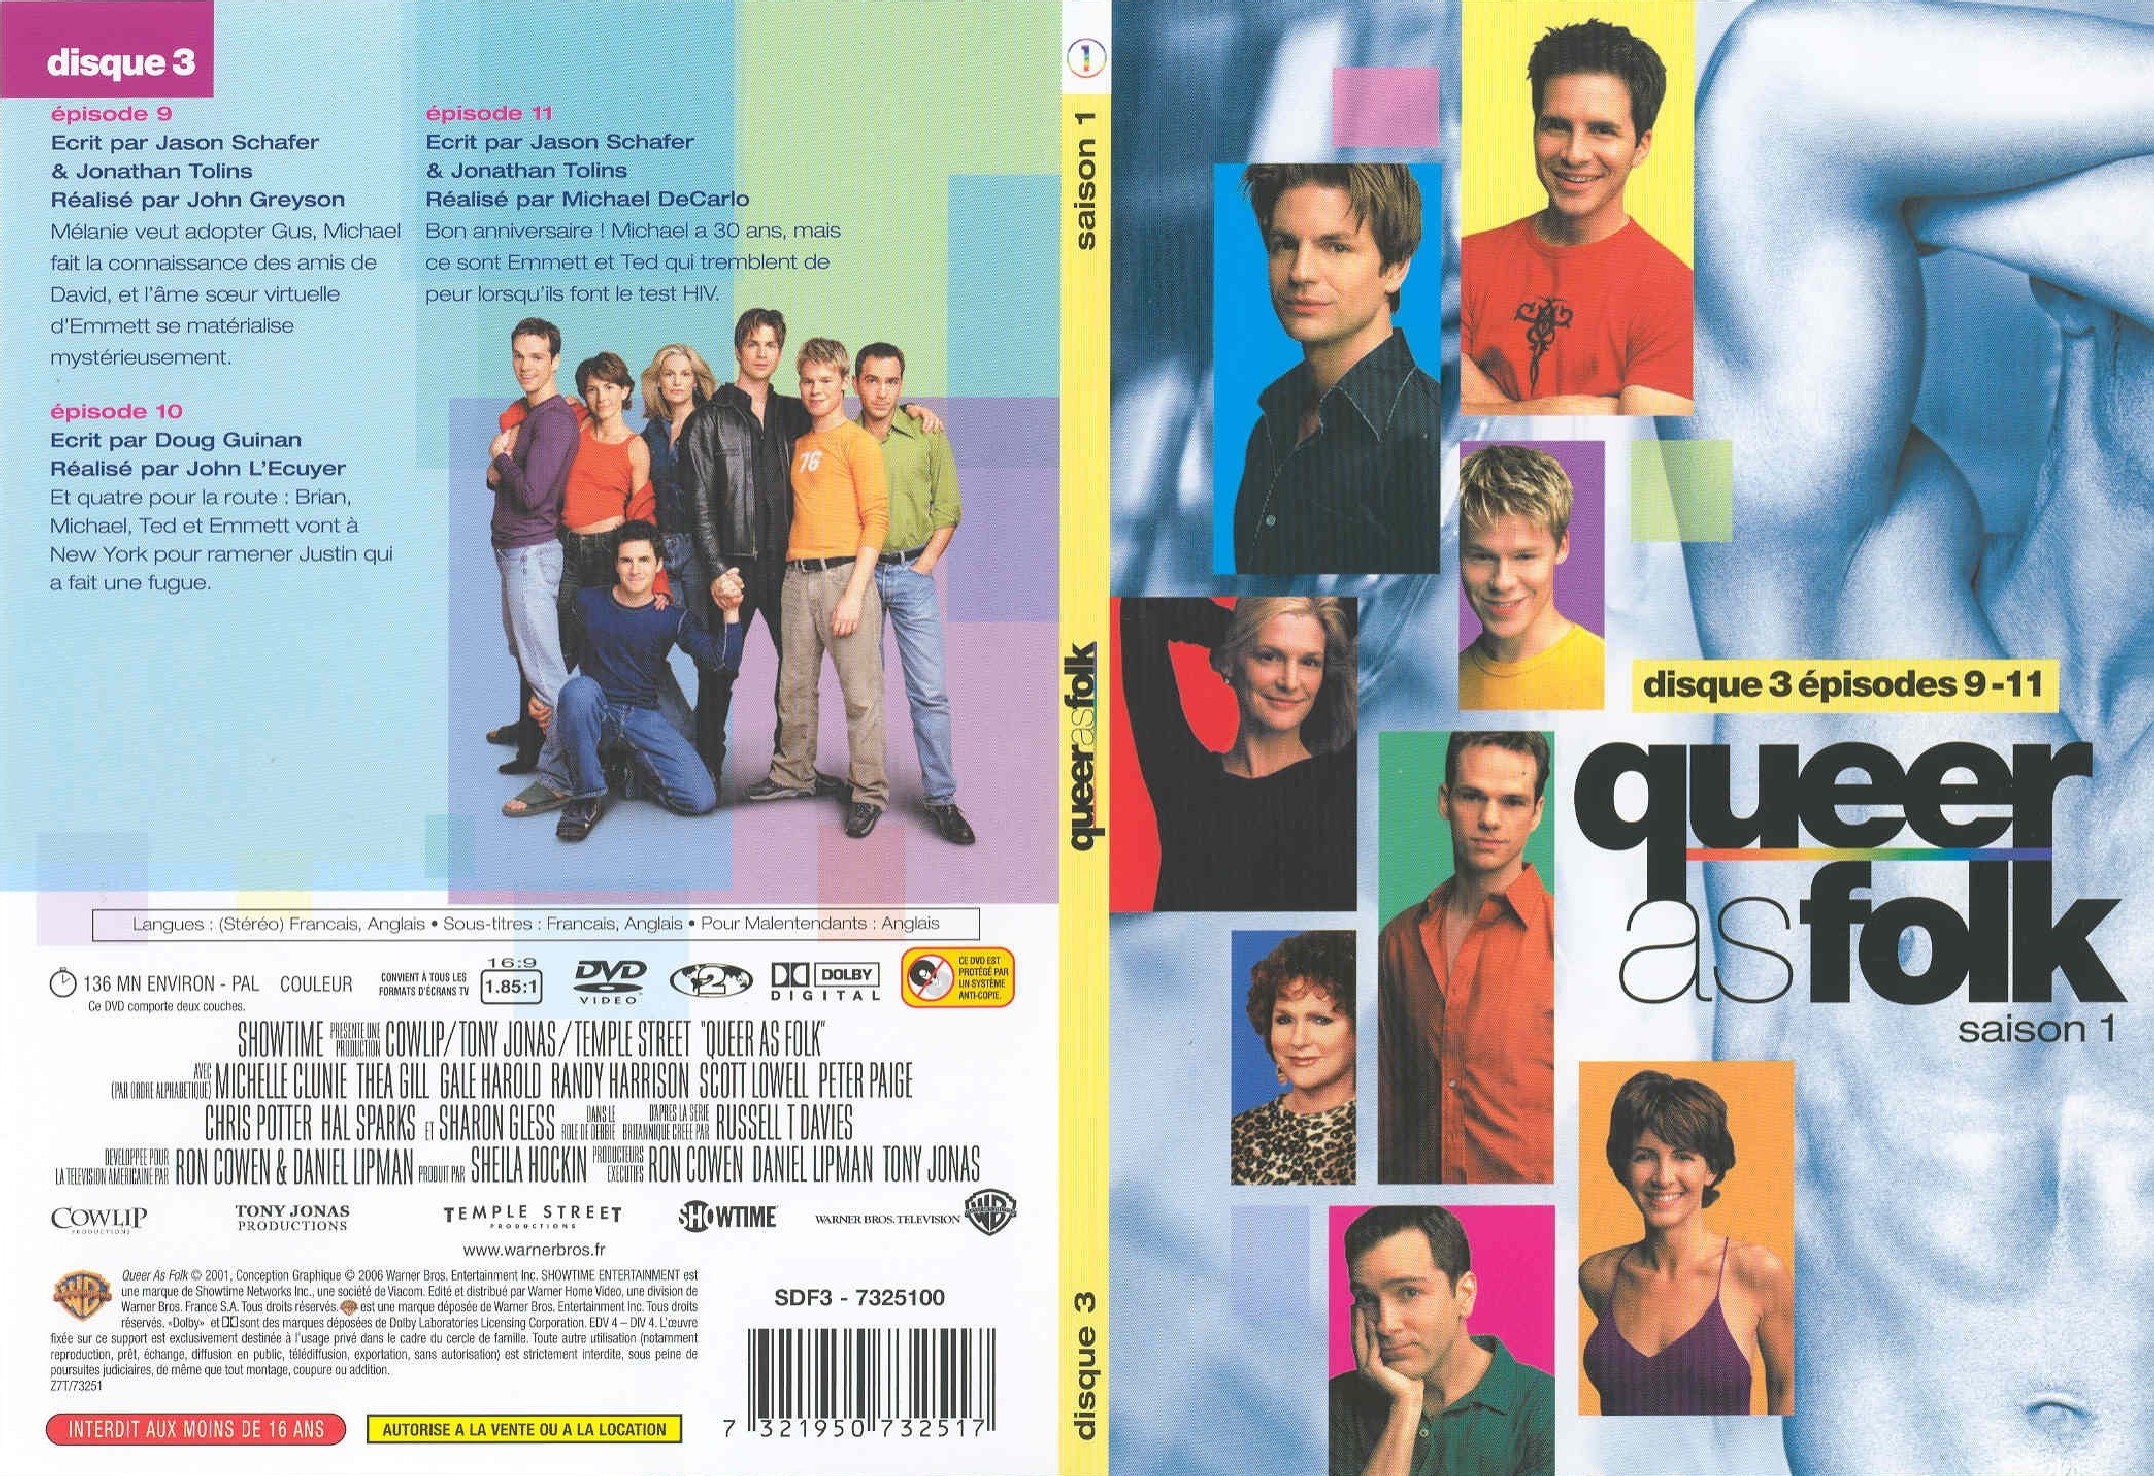 Jaquette DVD Queer As Folk (US) Saison 1 DVD 3